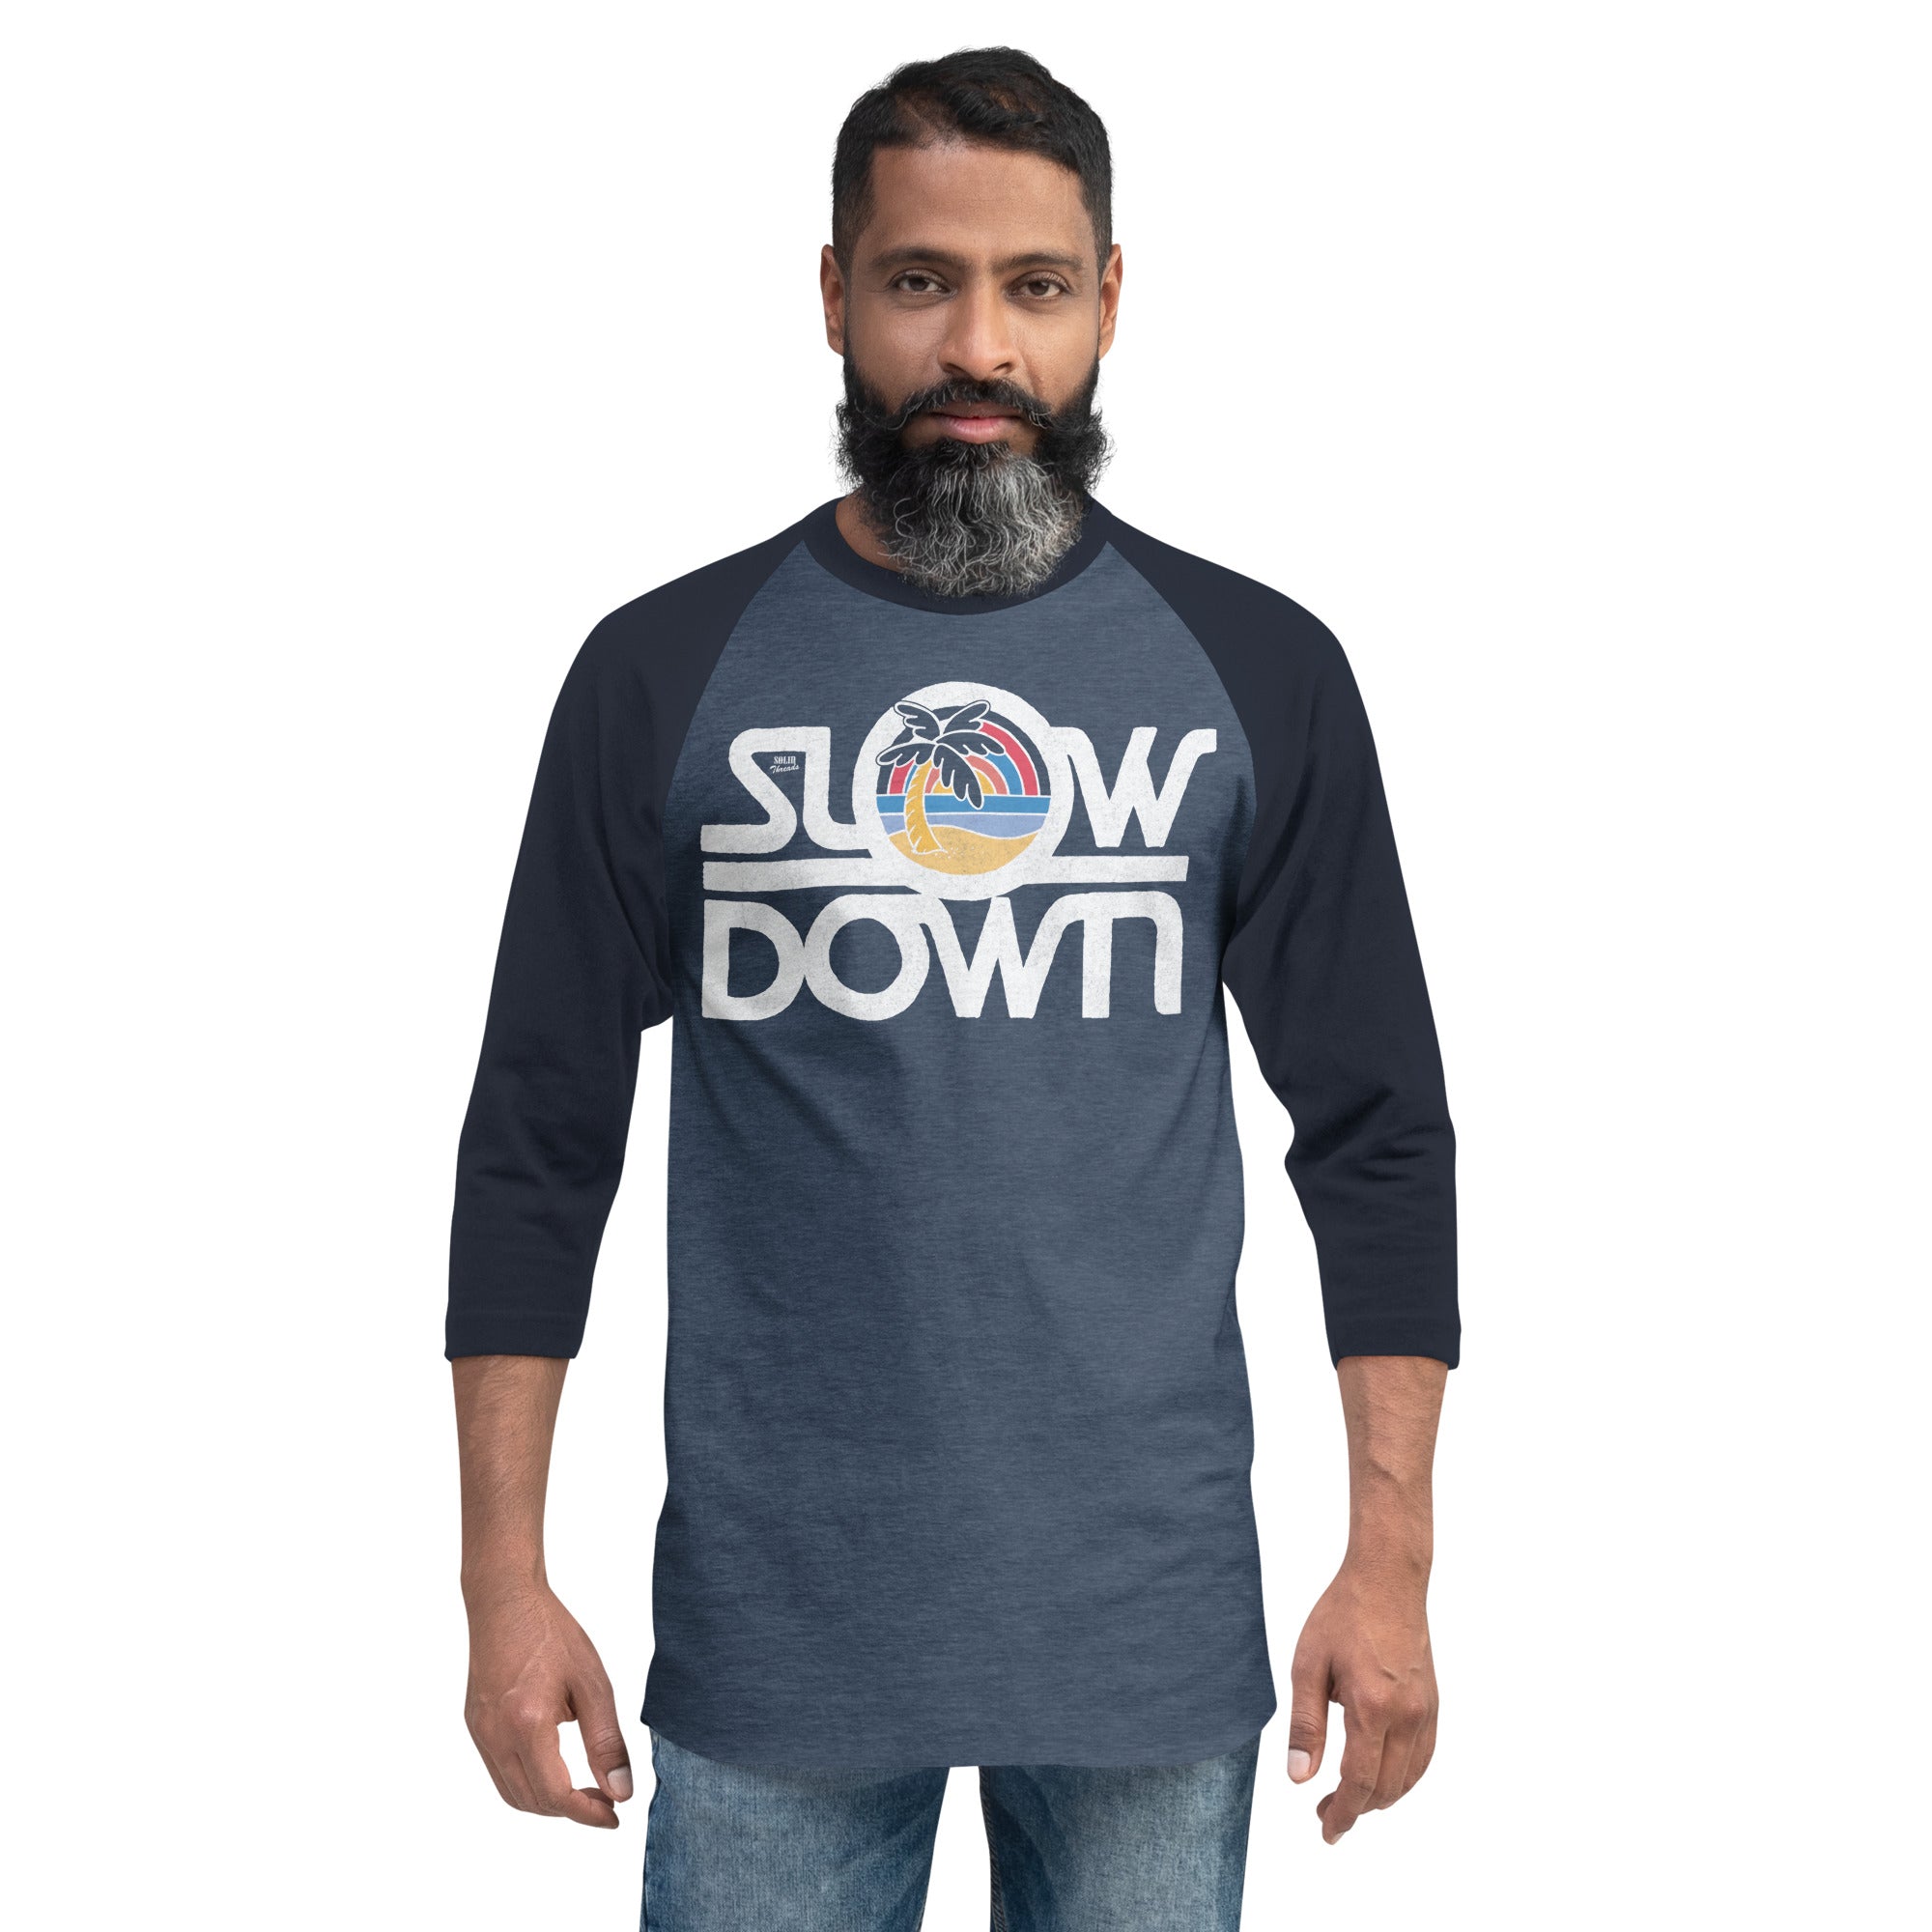 Slow Down Retro Beach Graphic Raglan Tee | Cool Tropical Vacation Baseball T-shirt | Solid Threads